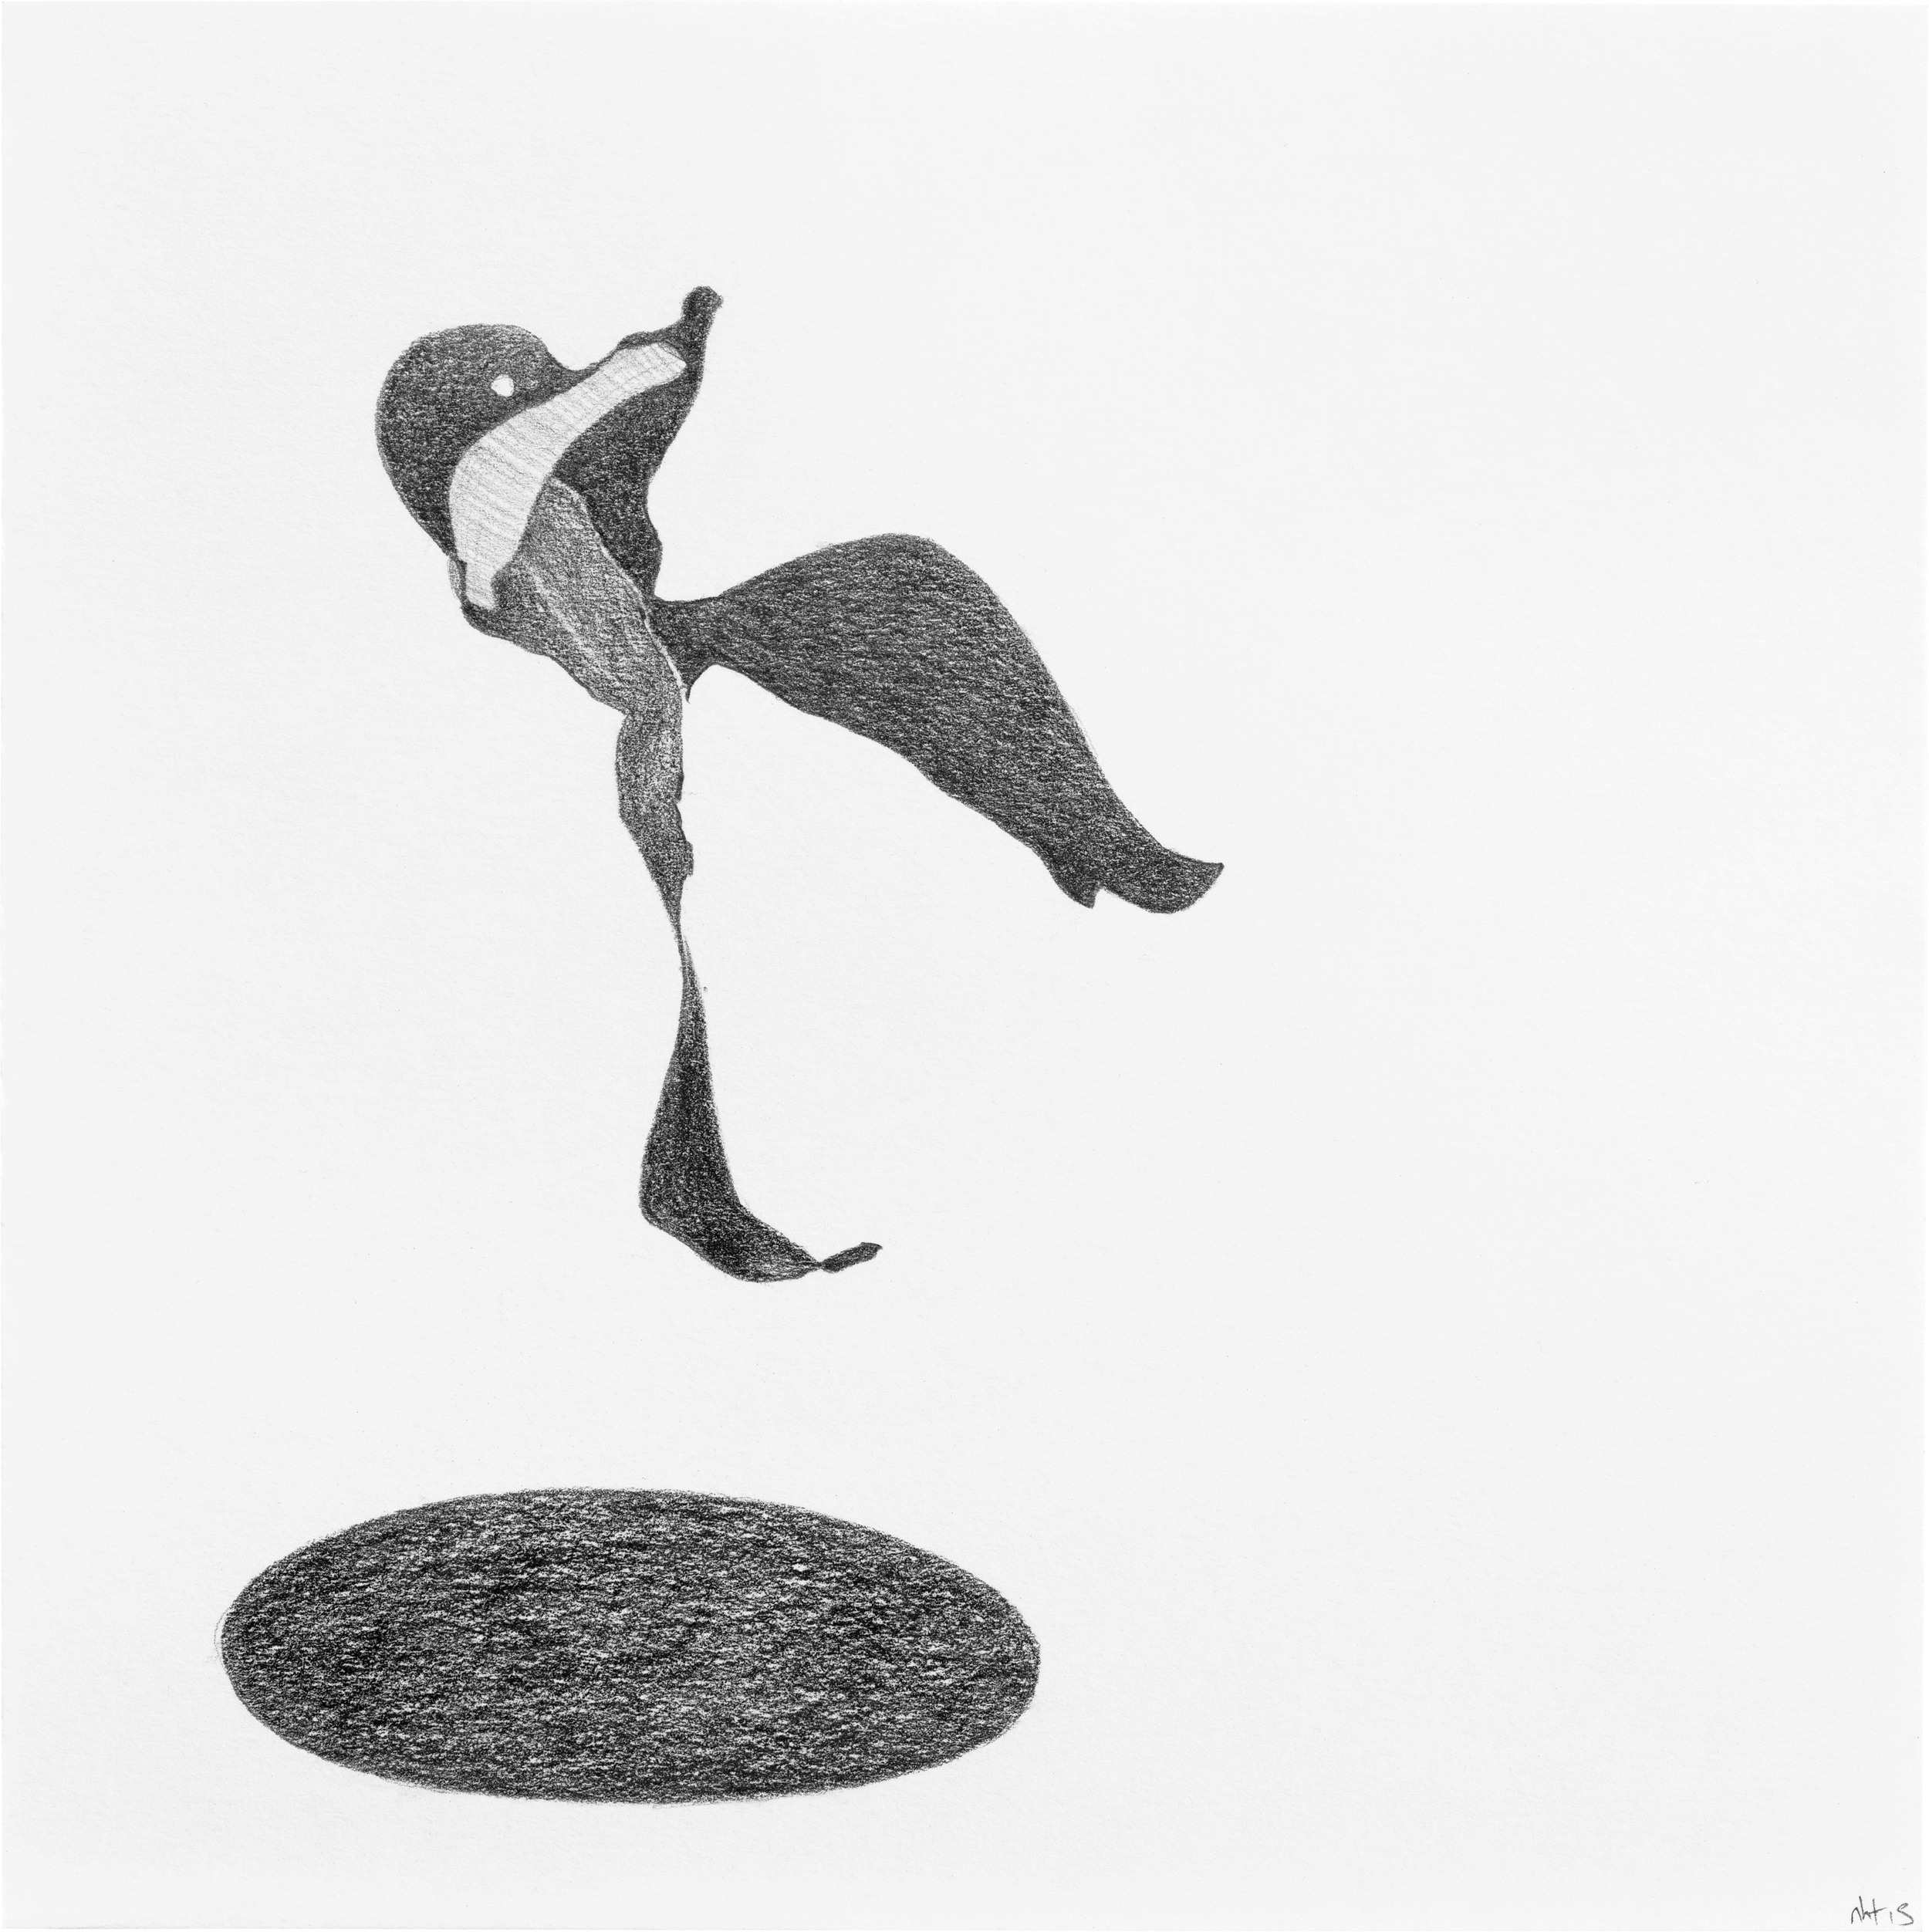 Nicola Tyson, Falling or floating, 2015